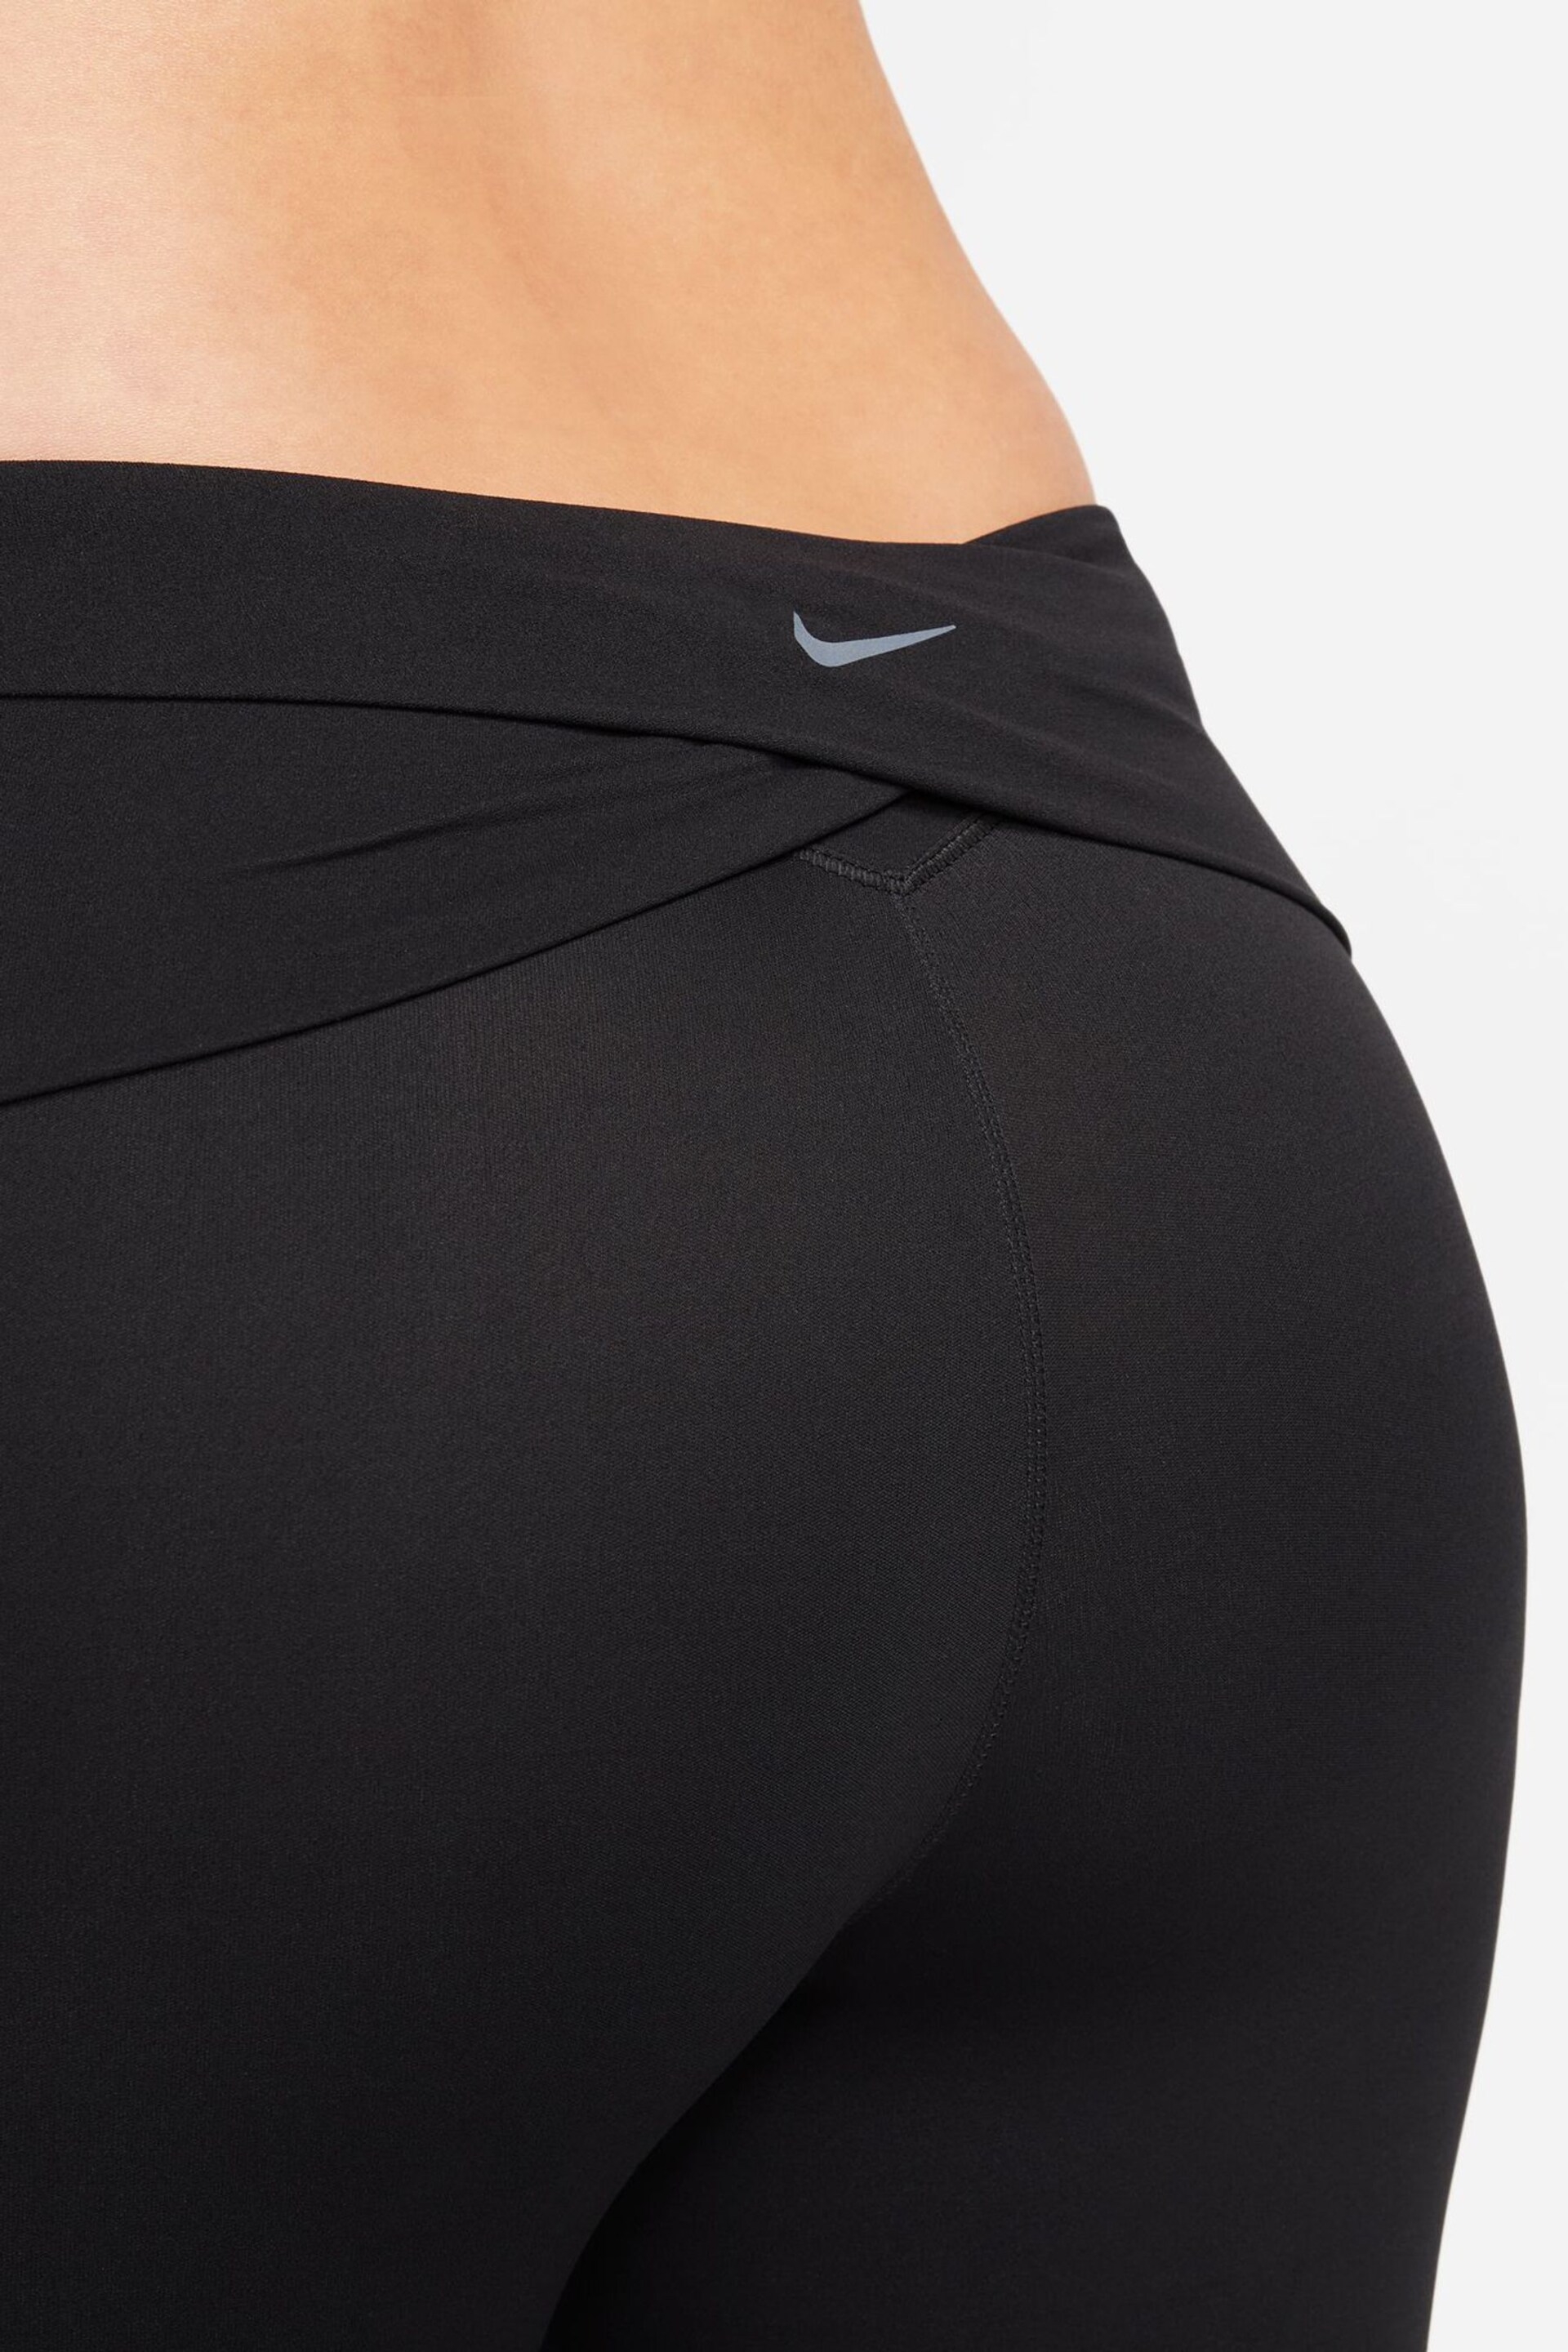 Nike Black Maternity Zenvy High Waisted 7/8 Leggings with Pockets - Image 8 of 9